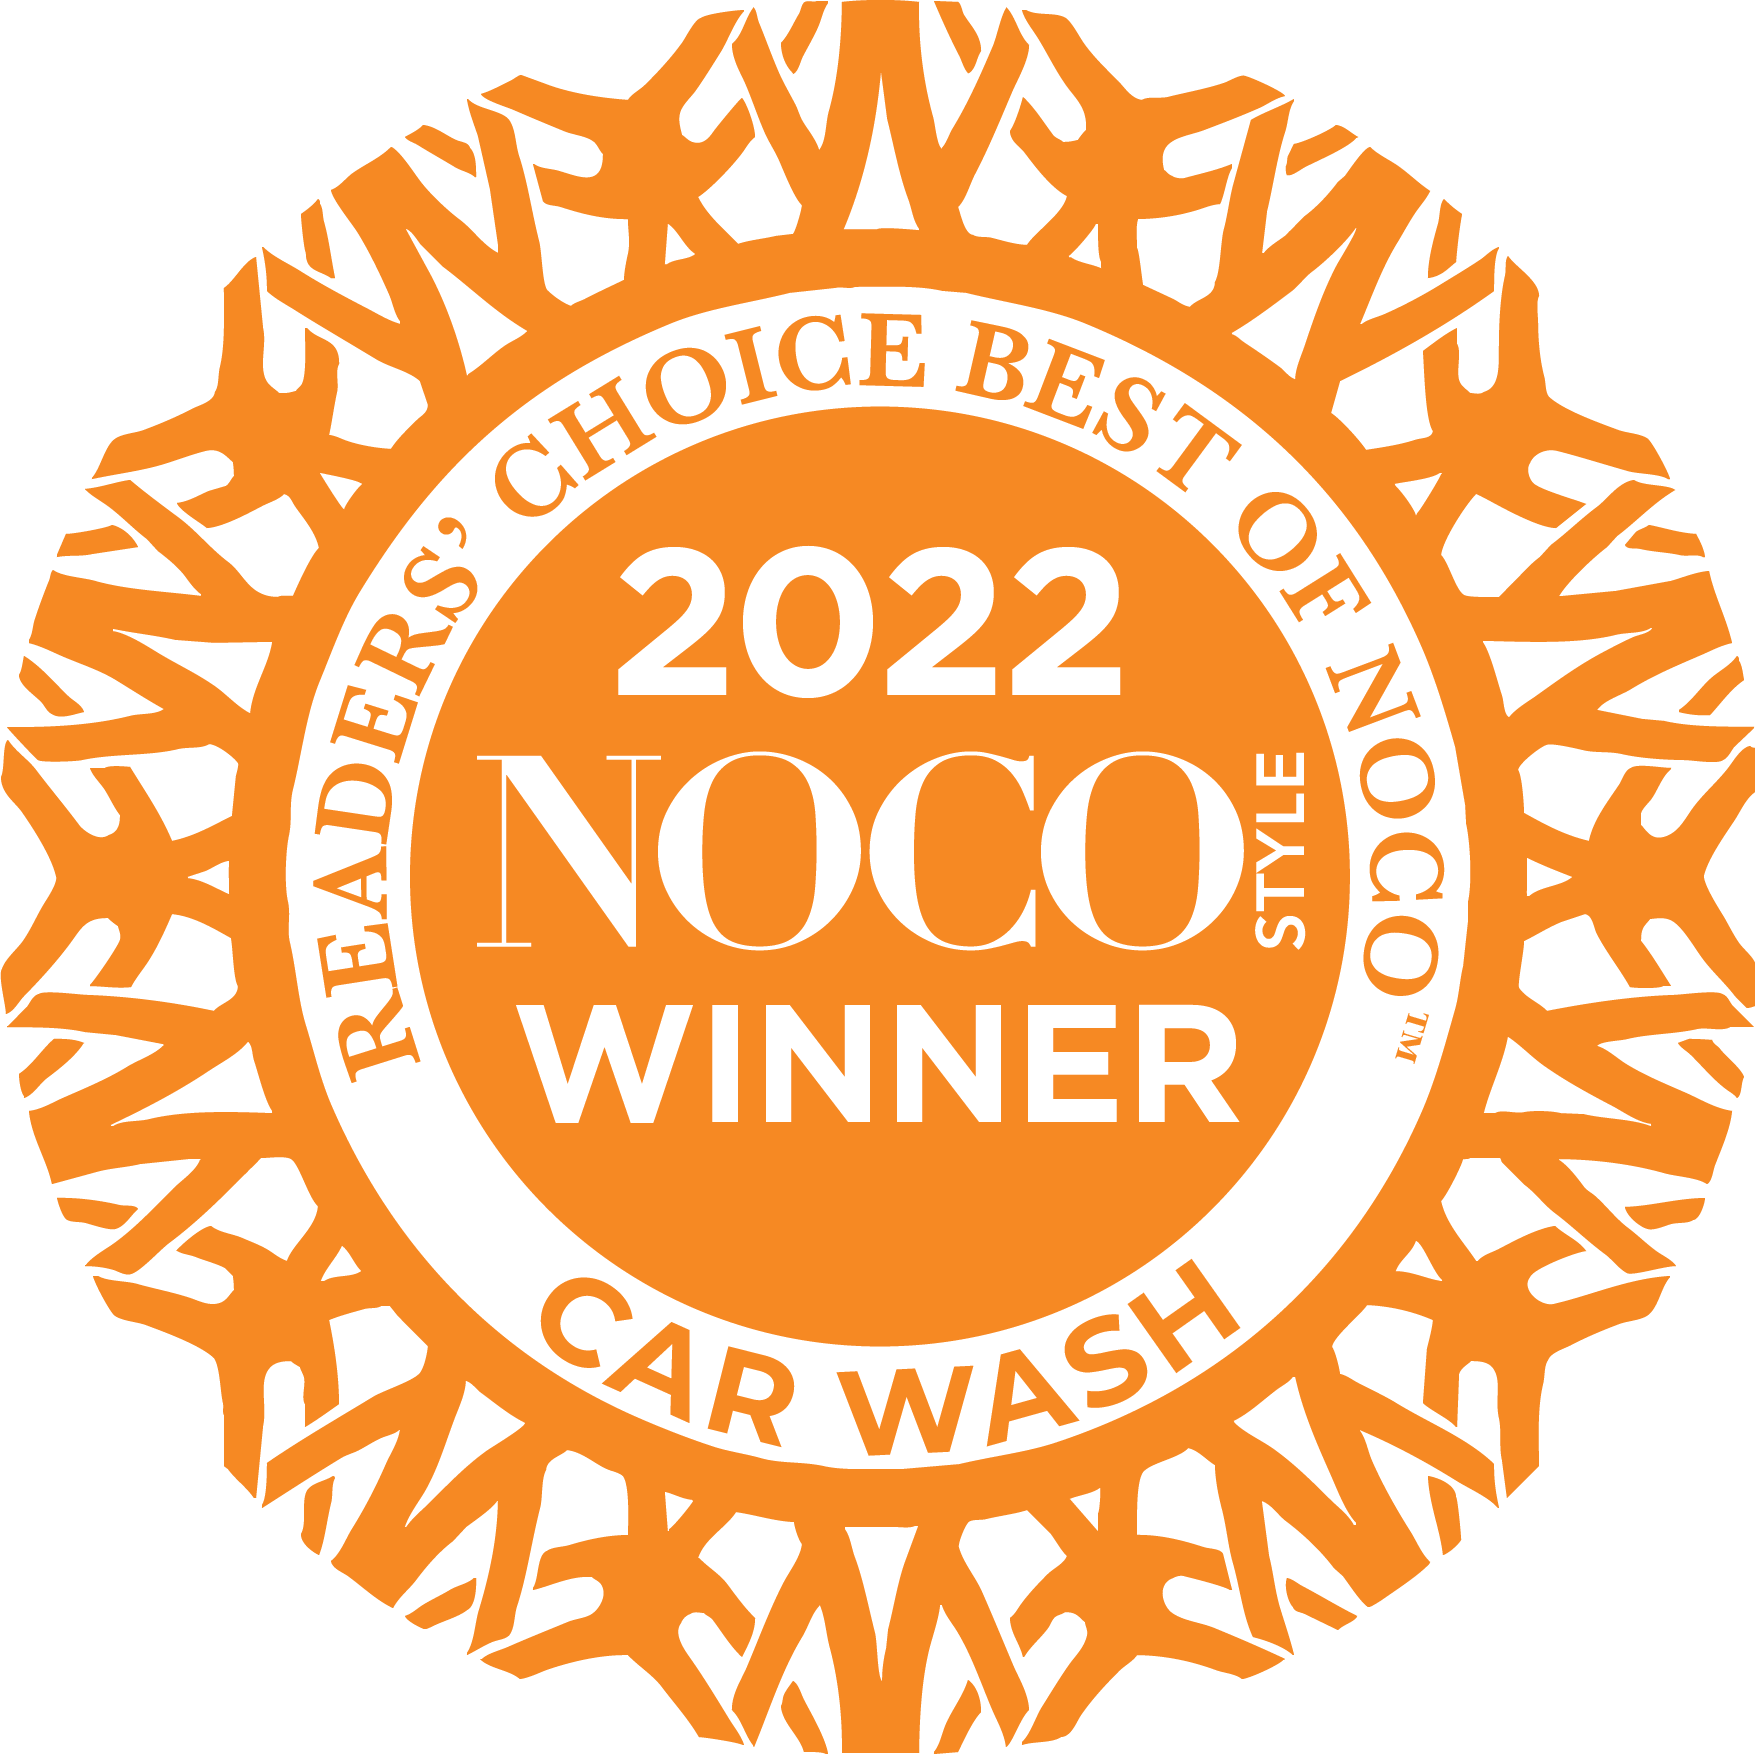 2020 Noco Choice Winner Badge